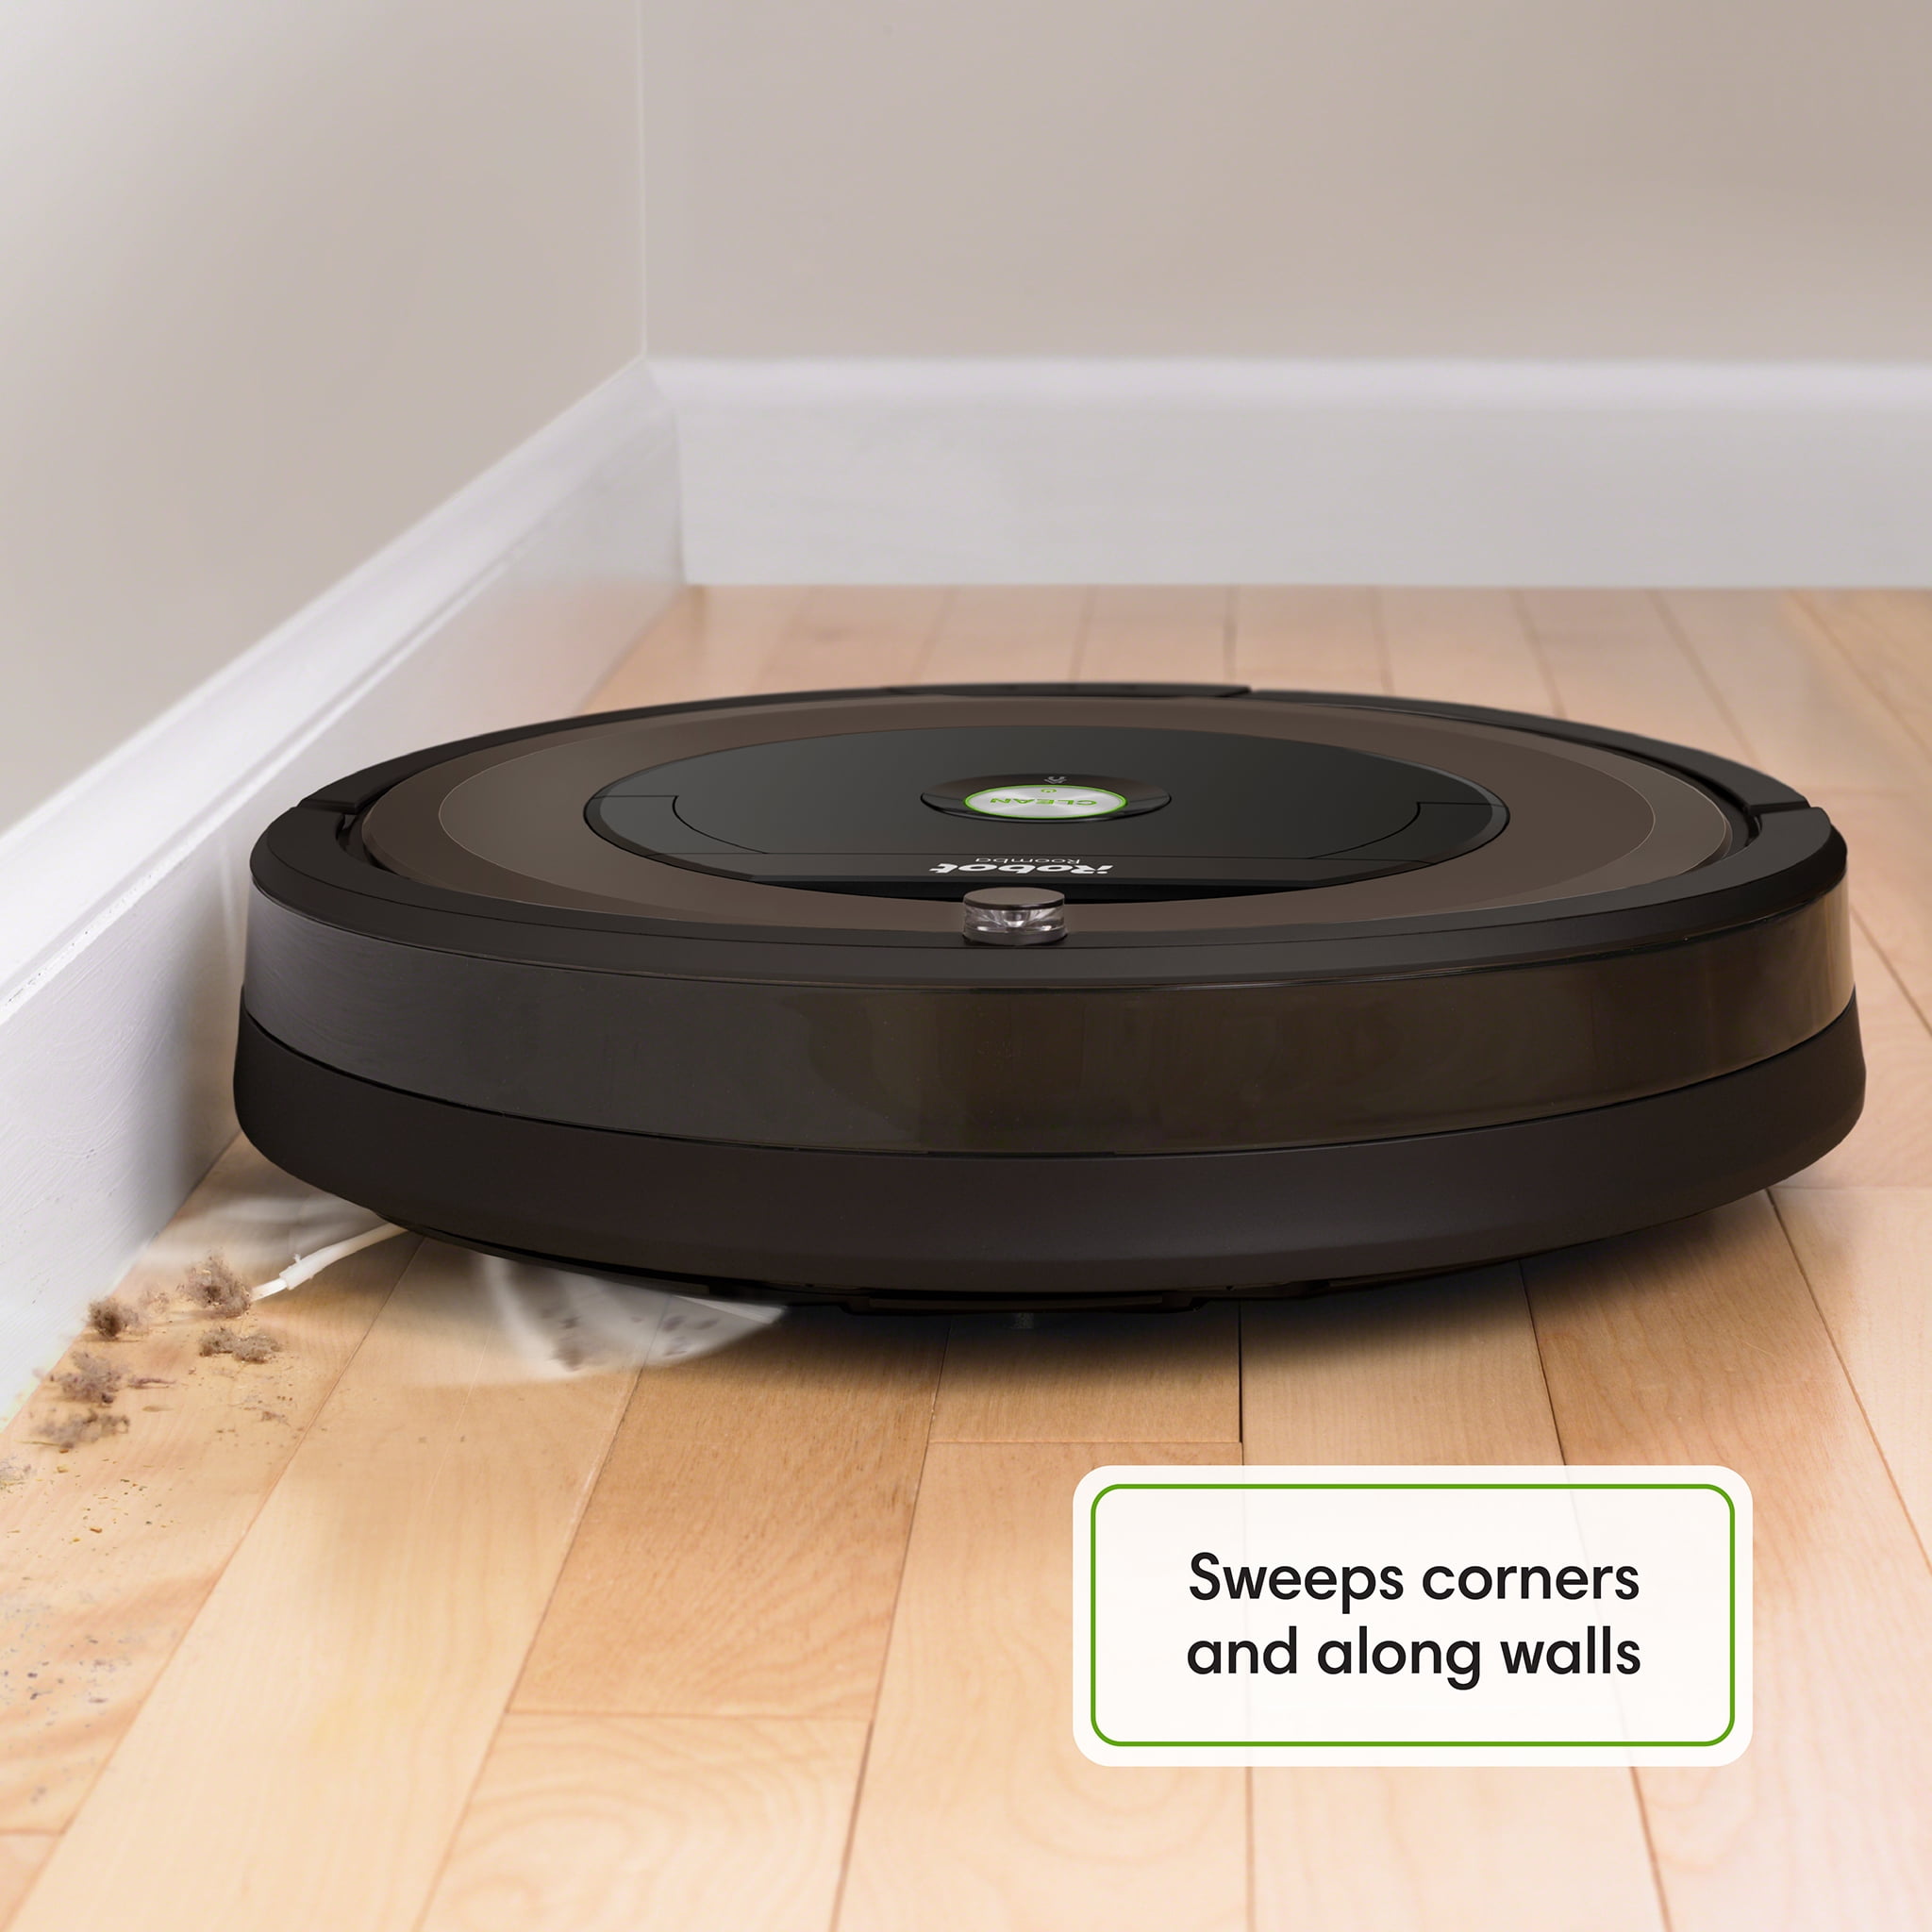 Irobot Roomba 890 Robot Vacuum Wi Fi, Roomba Good For Hardwood Floors